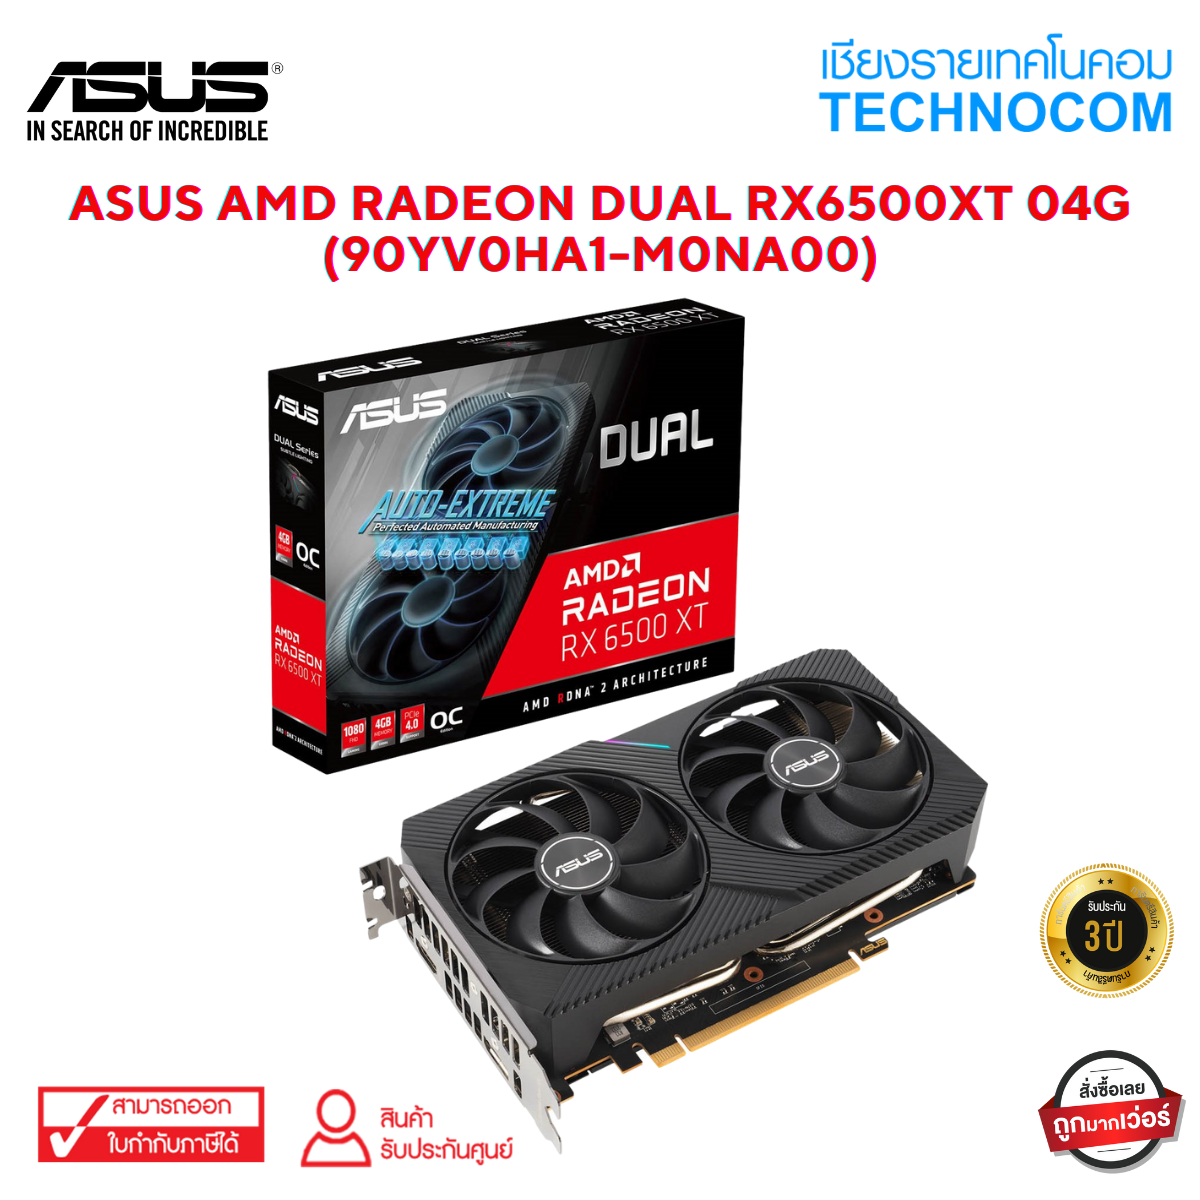 ASUS AMD RADEON DUAL RX6500XT 04G (90YV0HA1-M0NA00)